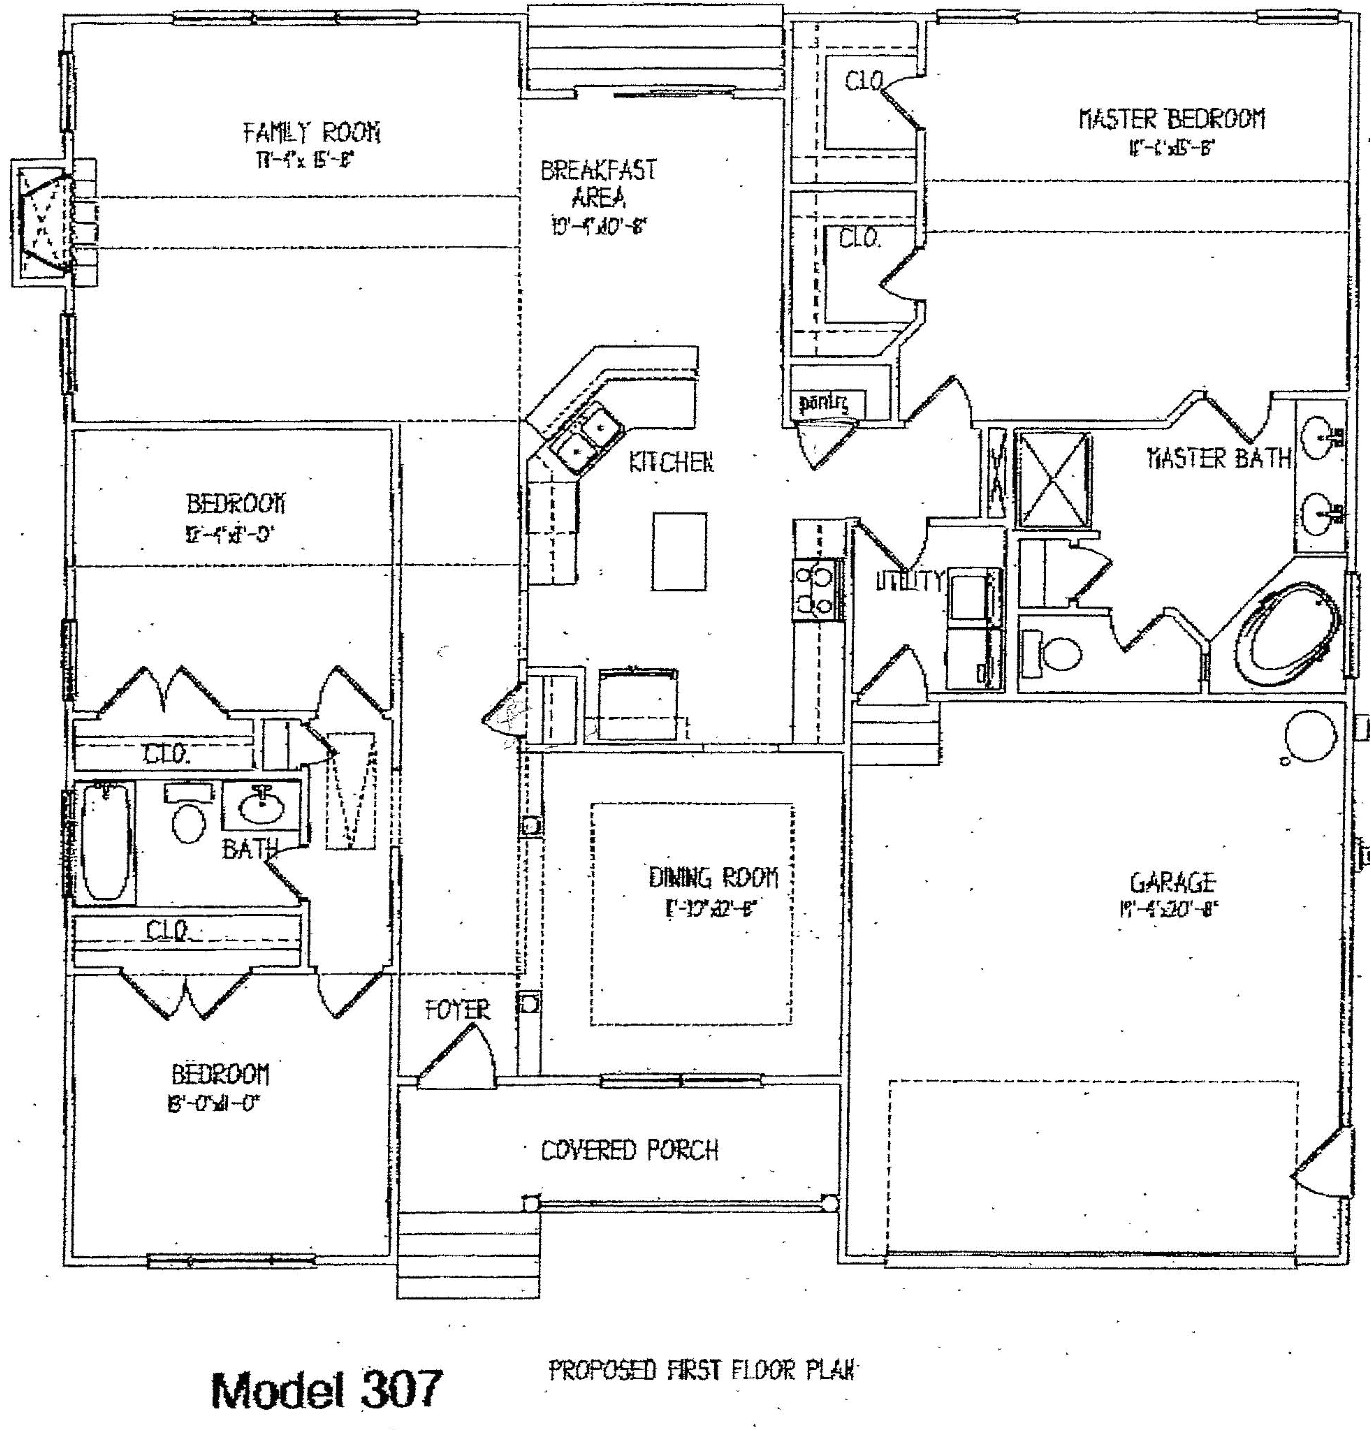 plan draw floor plans online tritmonk design photo gallery for modern bedroom interior floor plan maker construction moving s